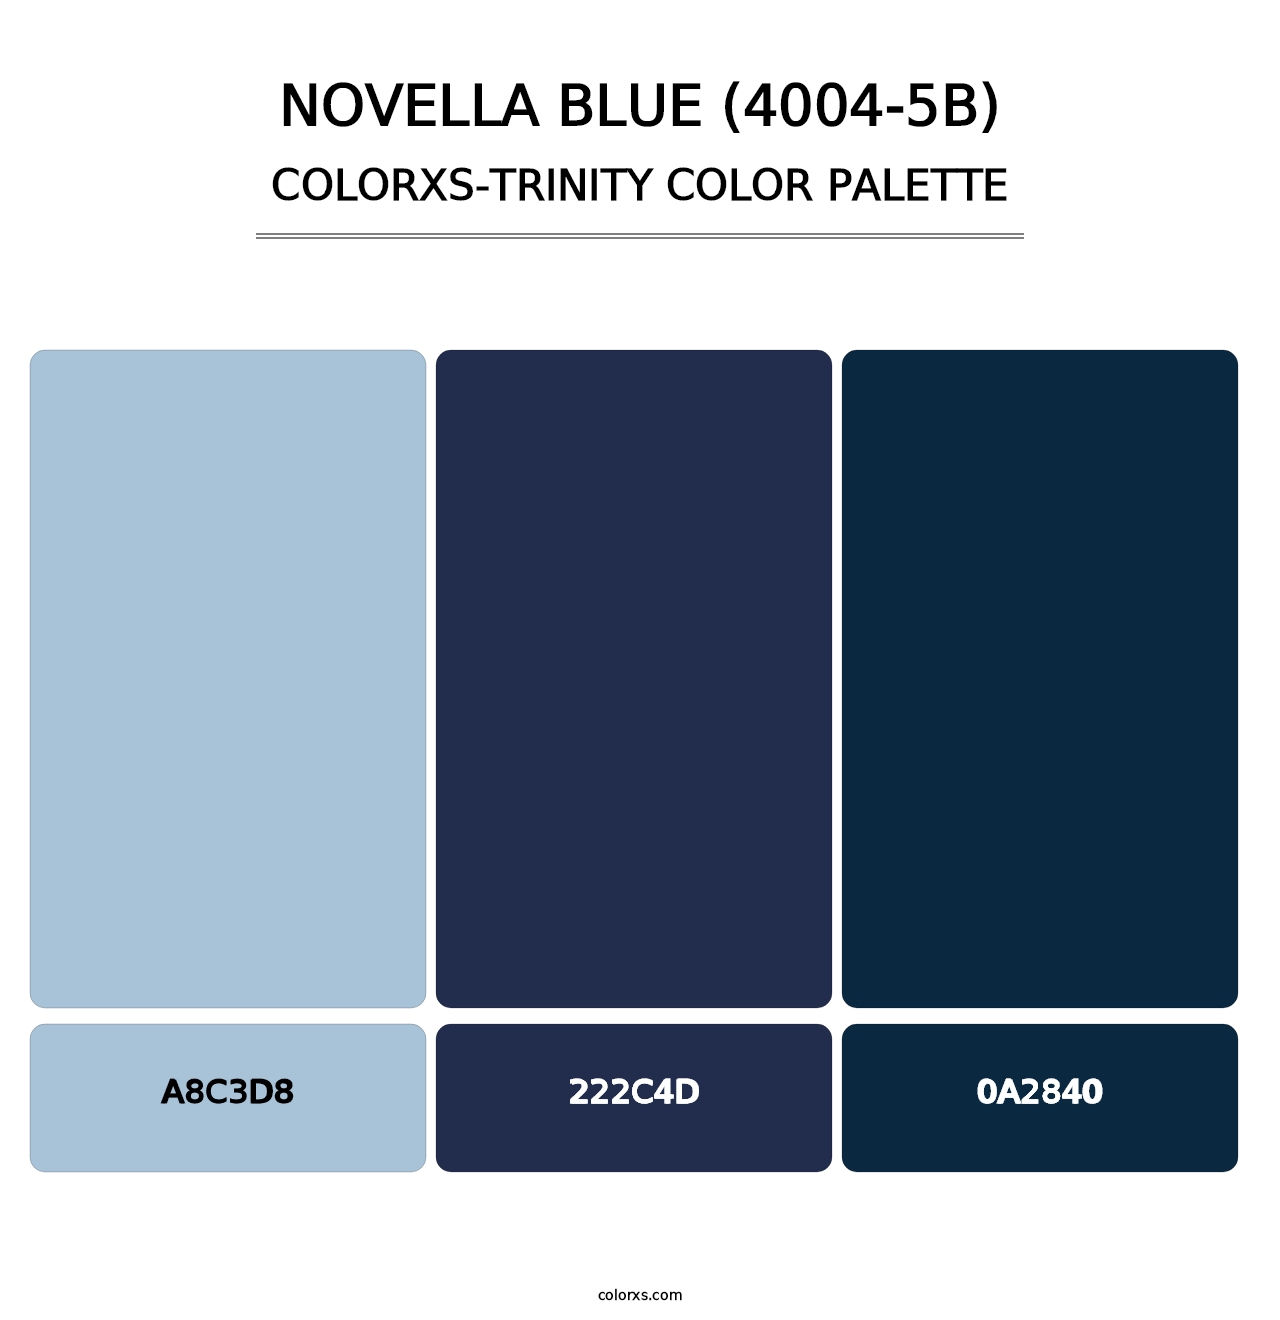 Novella Blue (4004-5B) - Colorxs Trinity Palette